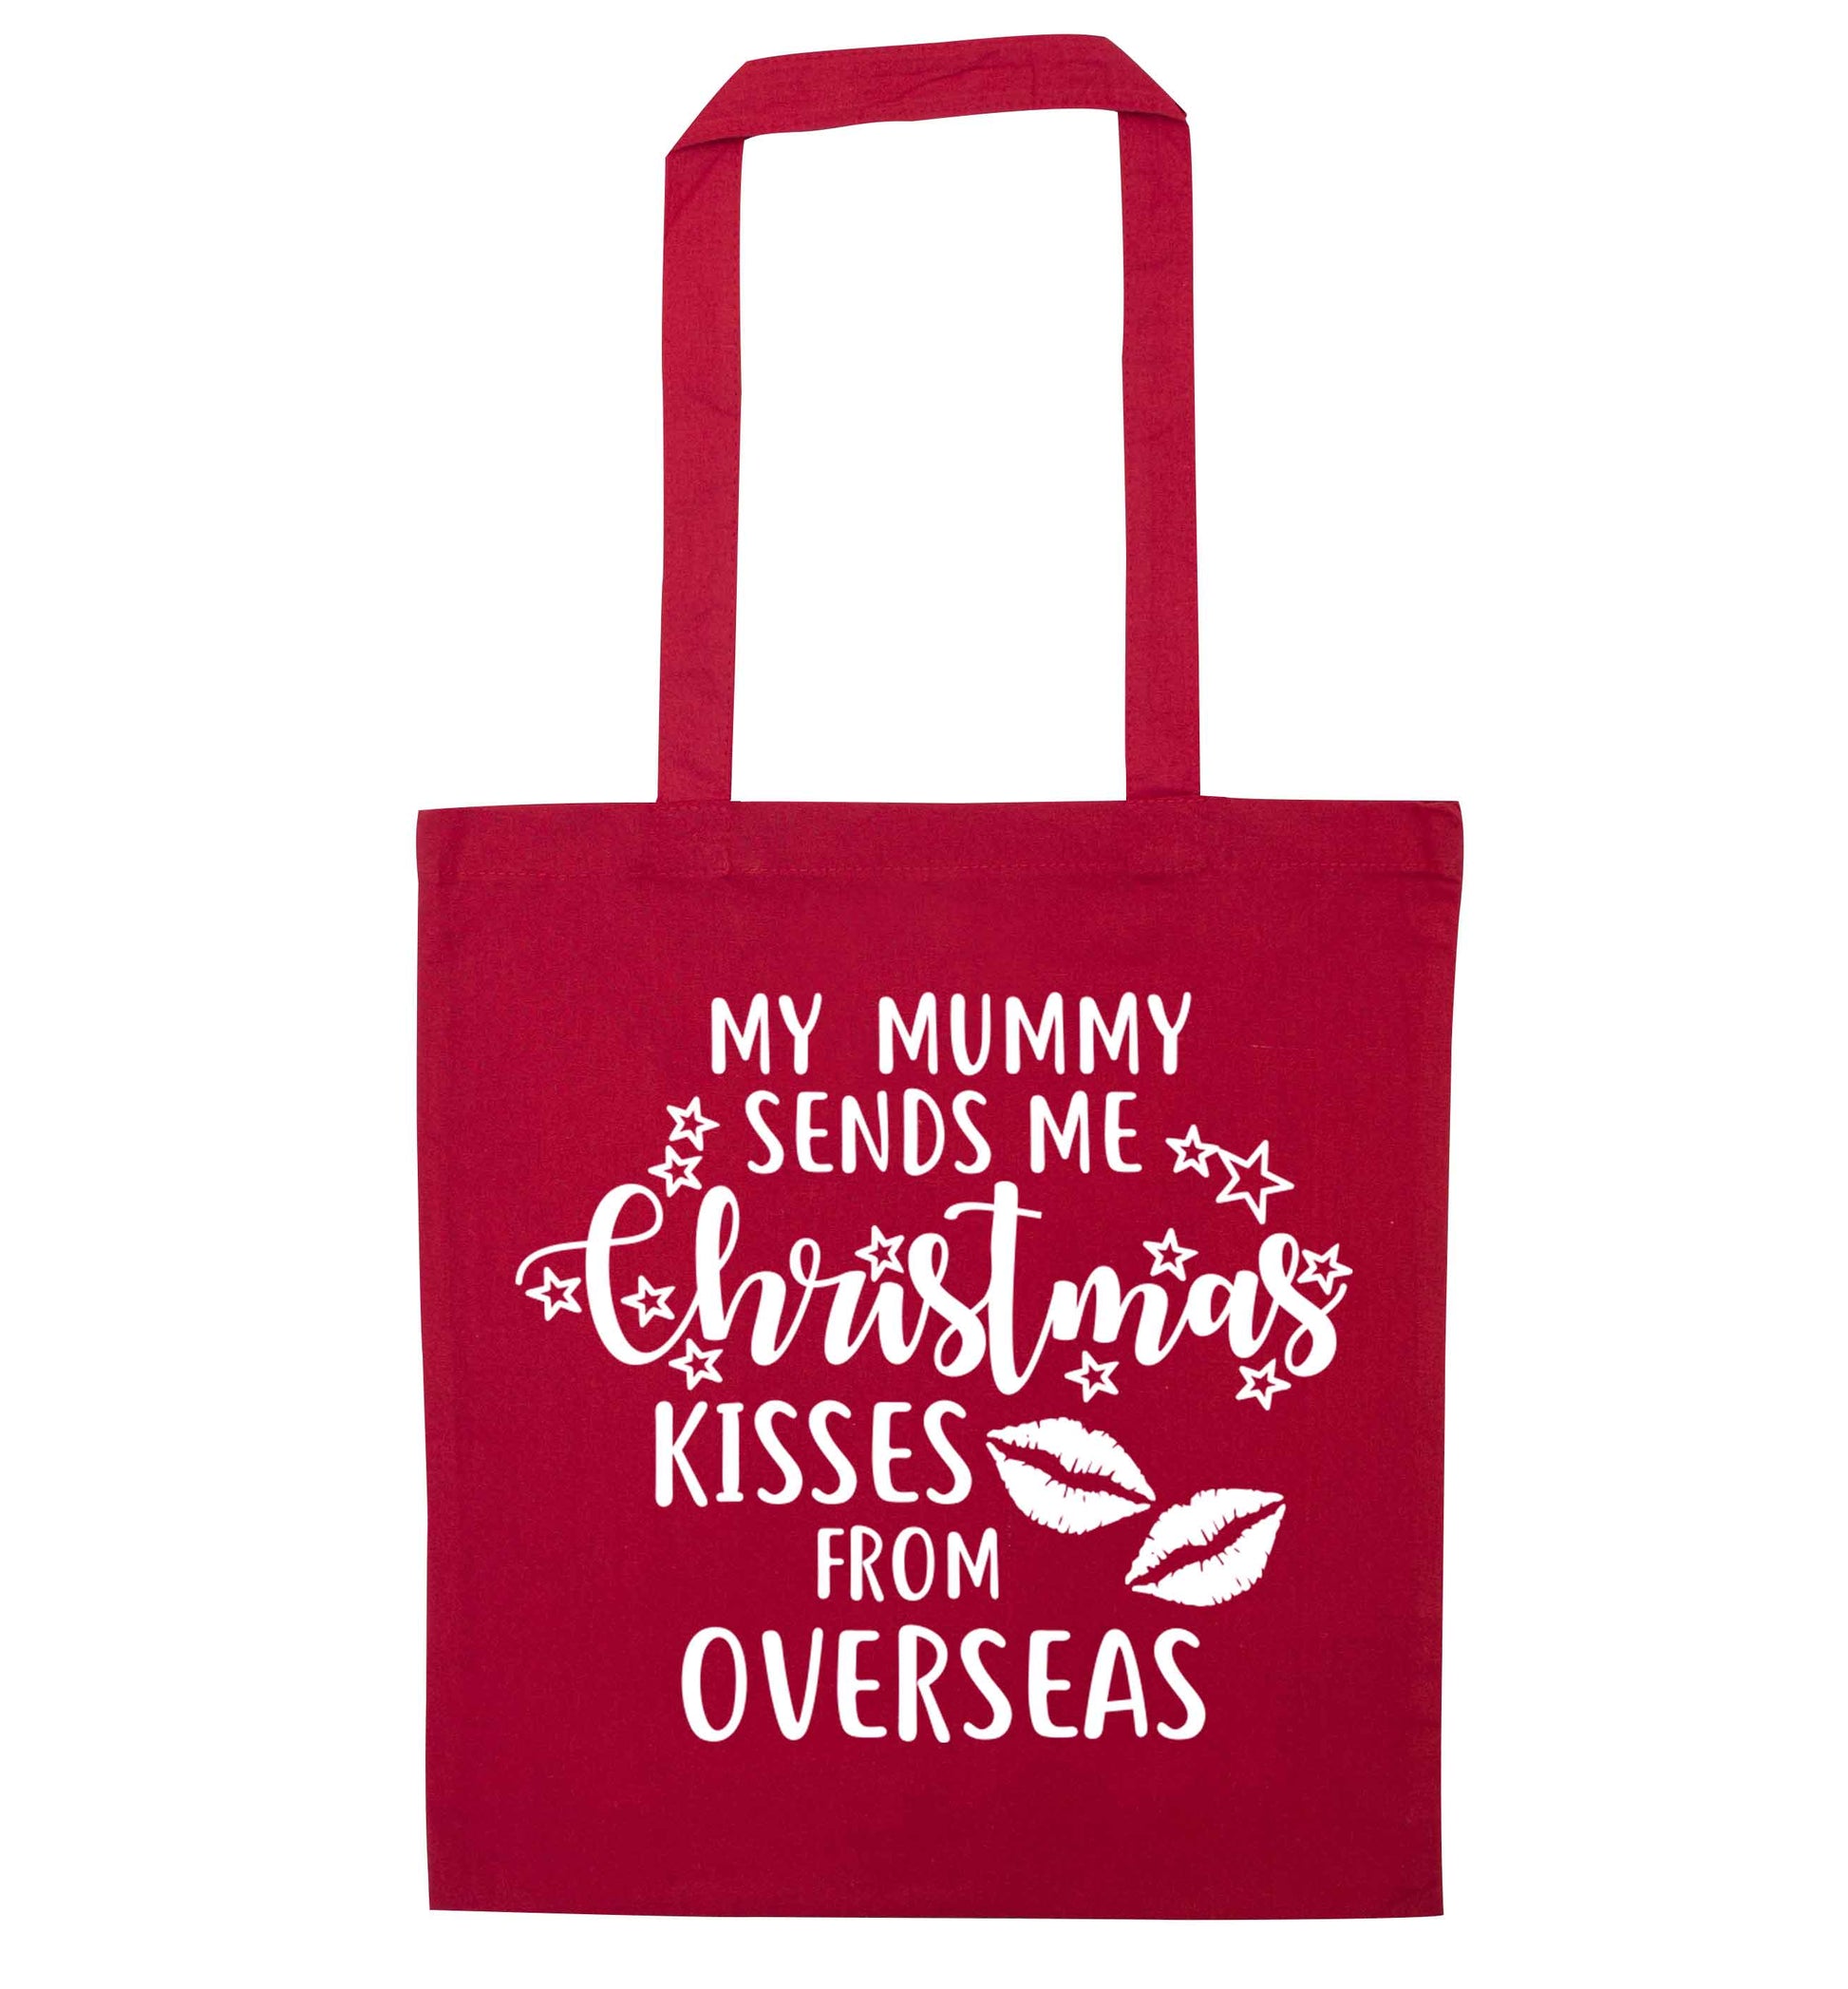 Mummy Christmas Kisses Overseas red tote bag